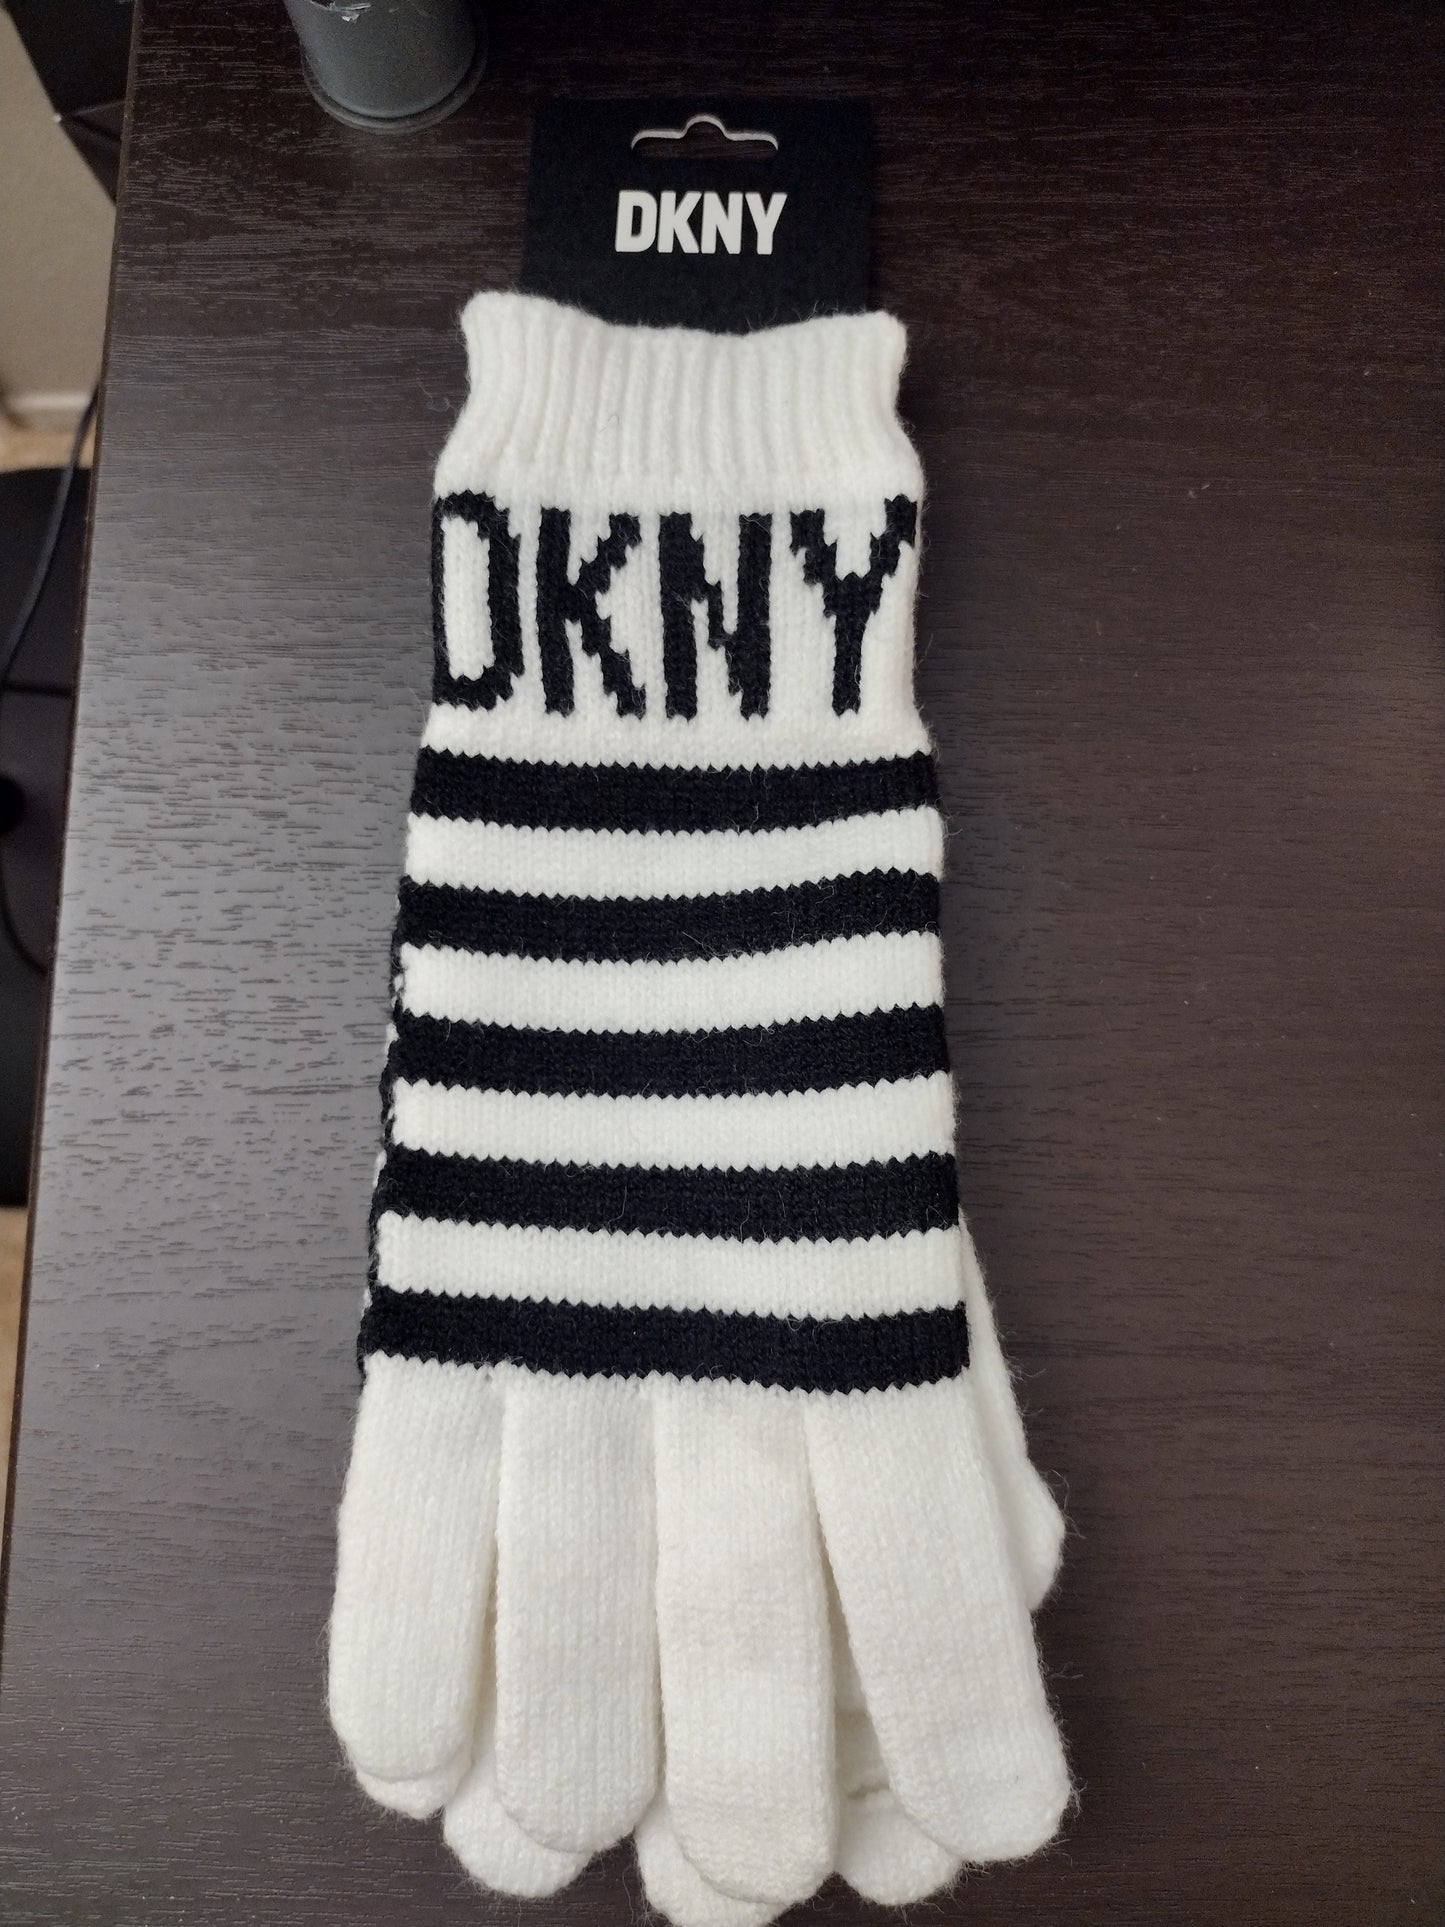 DKNY ivy women's black and white gloves